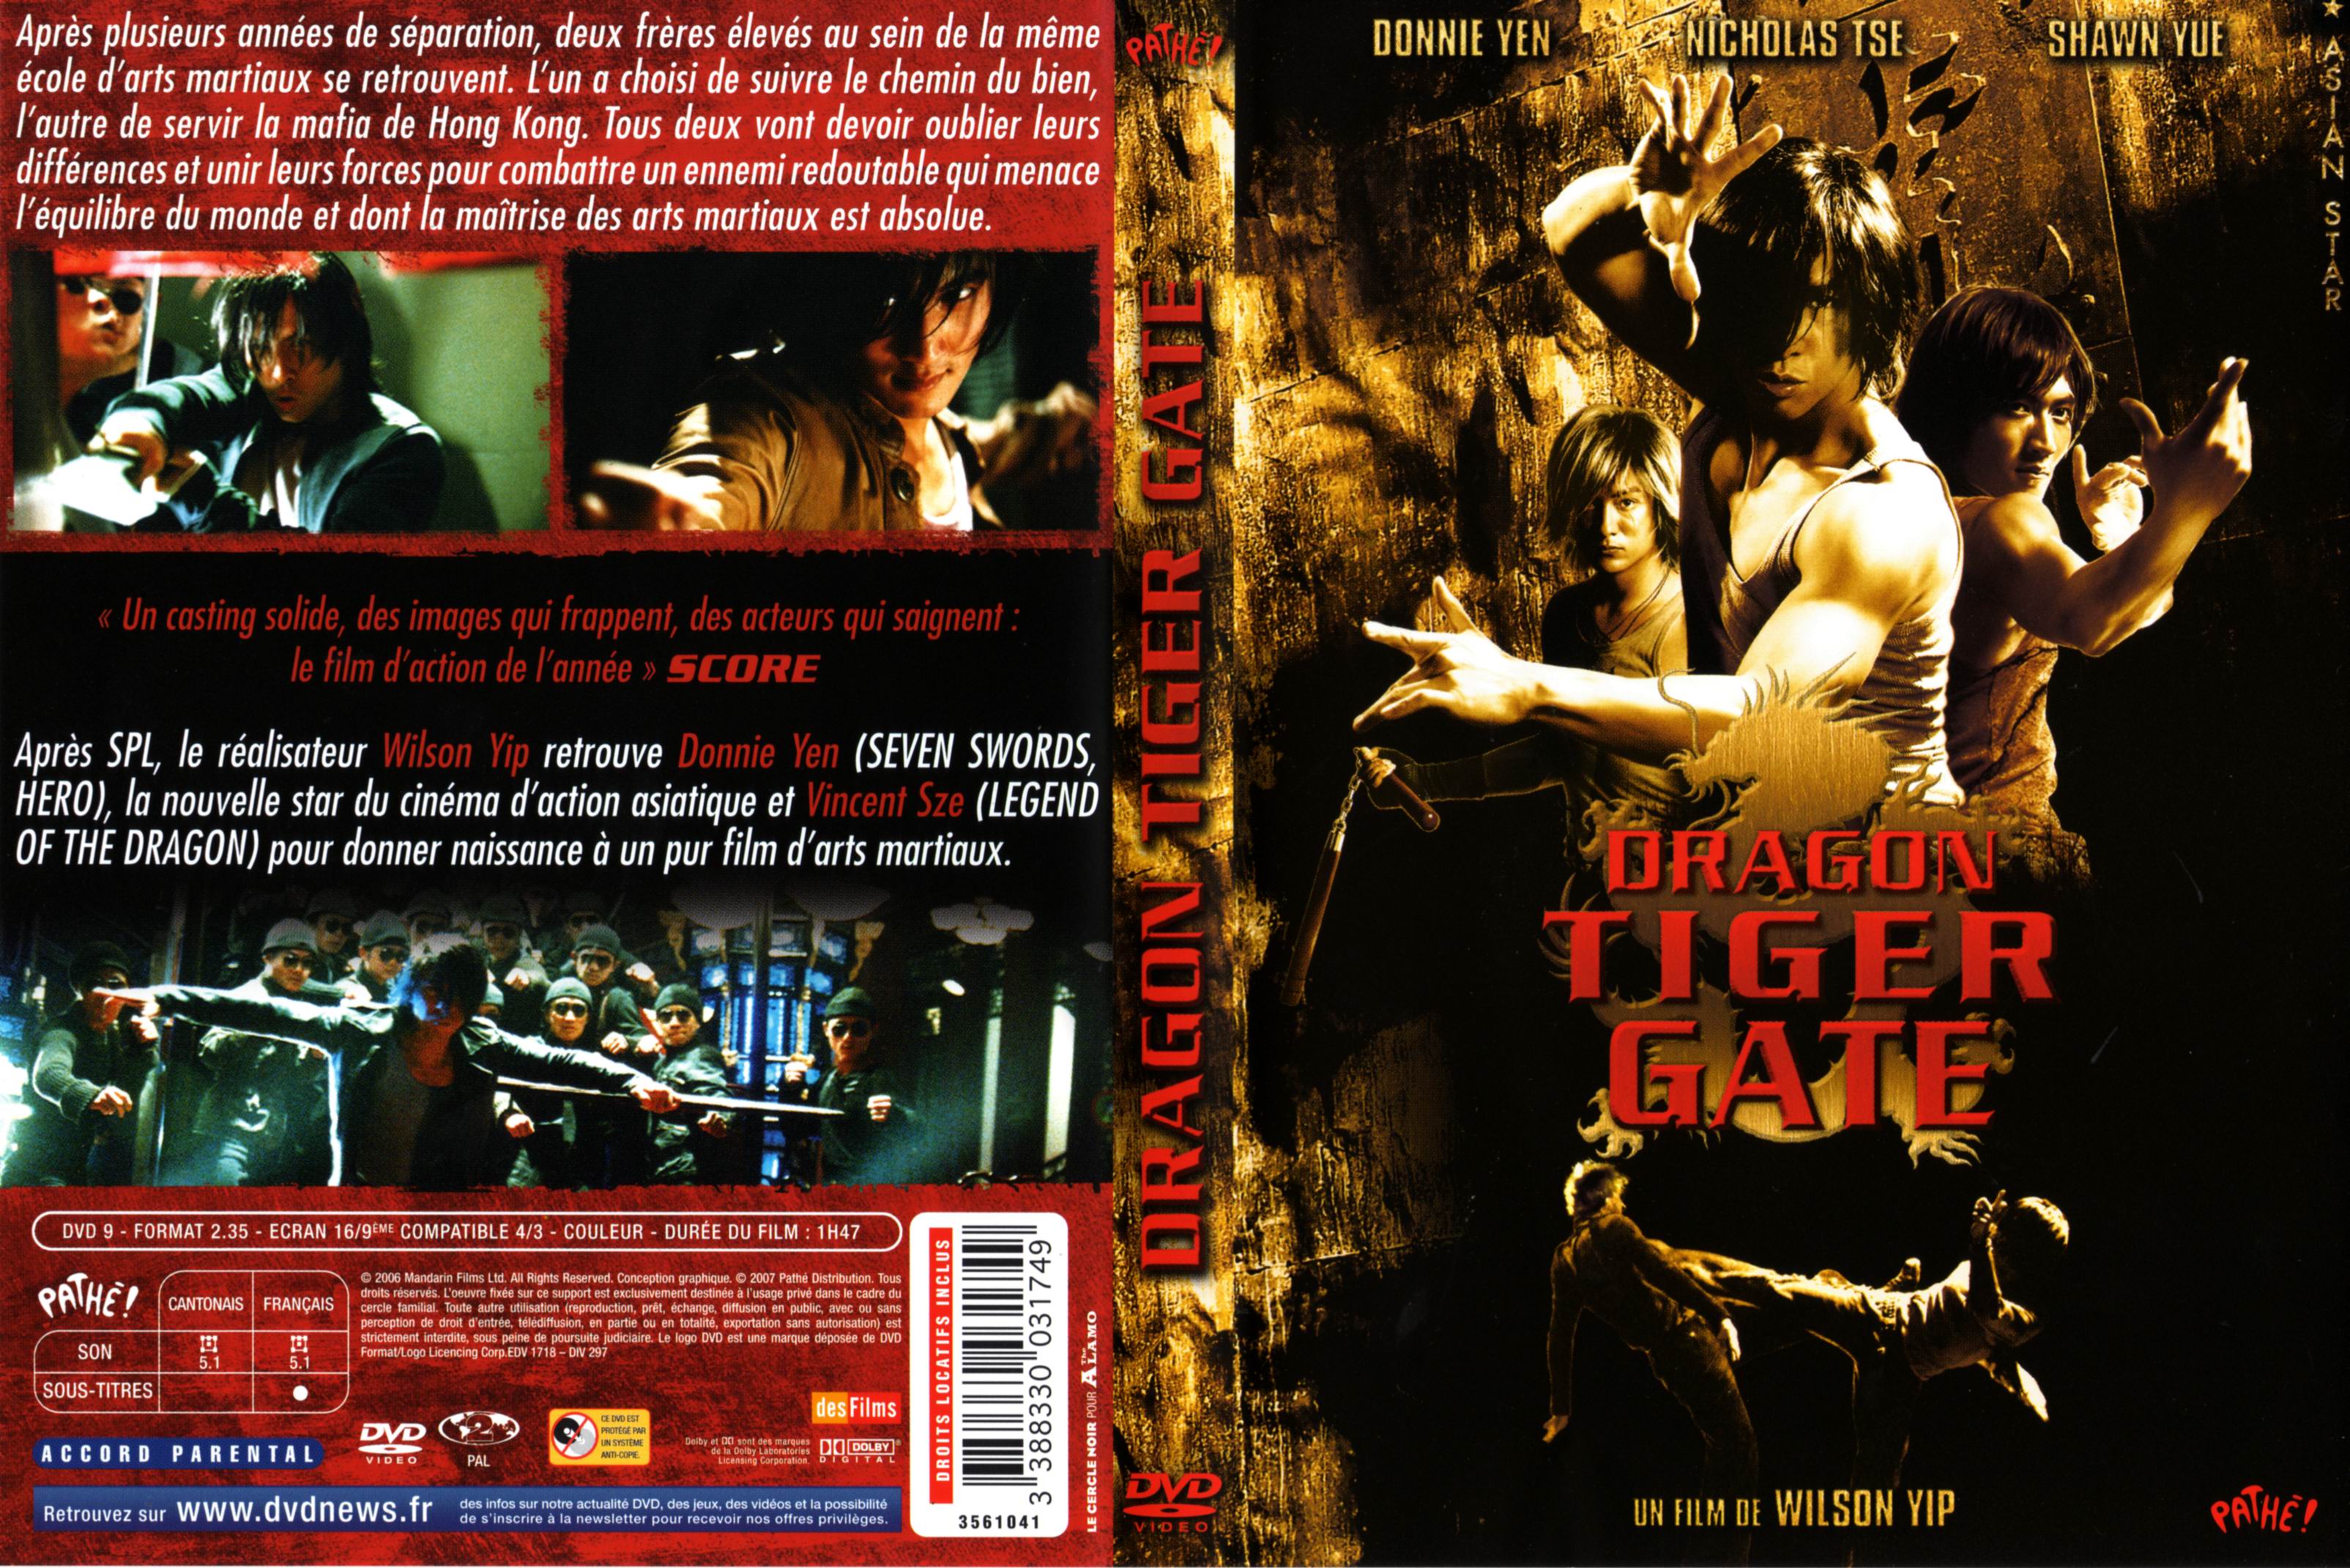 Jaquette DVD Dragon tiger gate